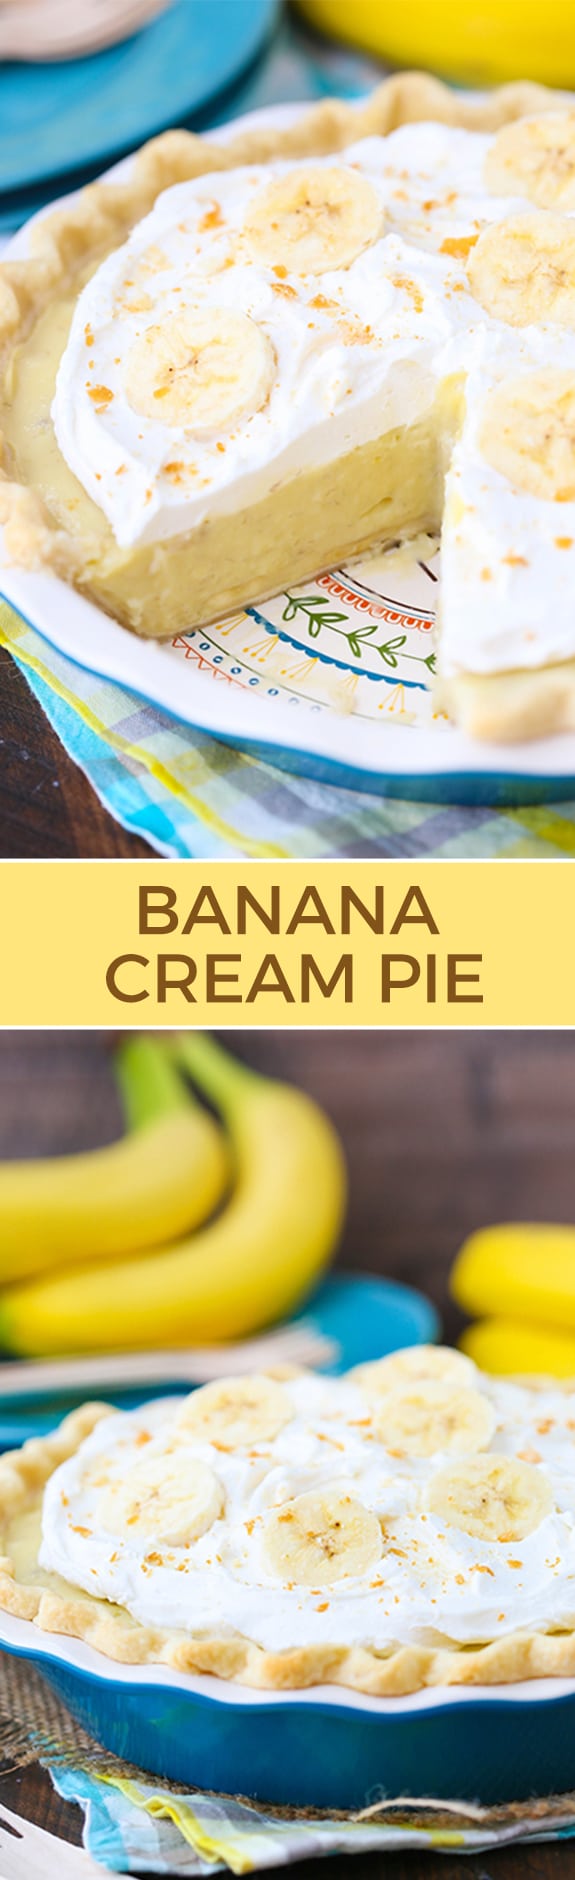 Banana Cream Pie - traditional banana cream pie recipe with a little twist!